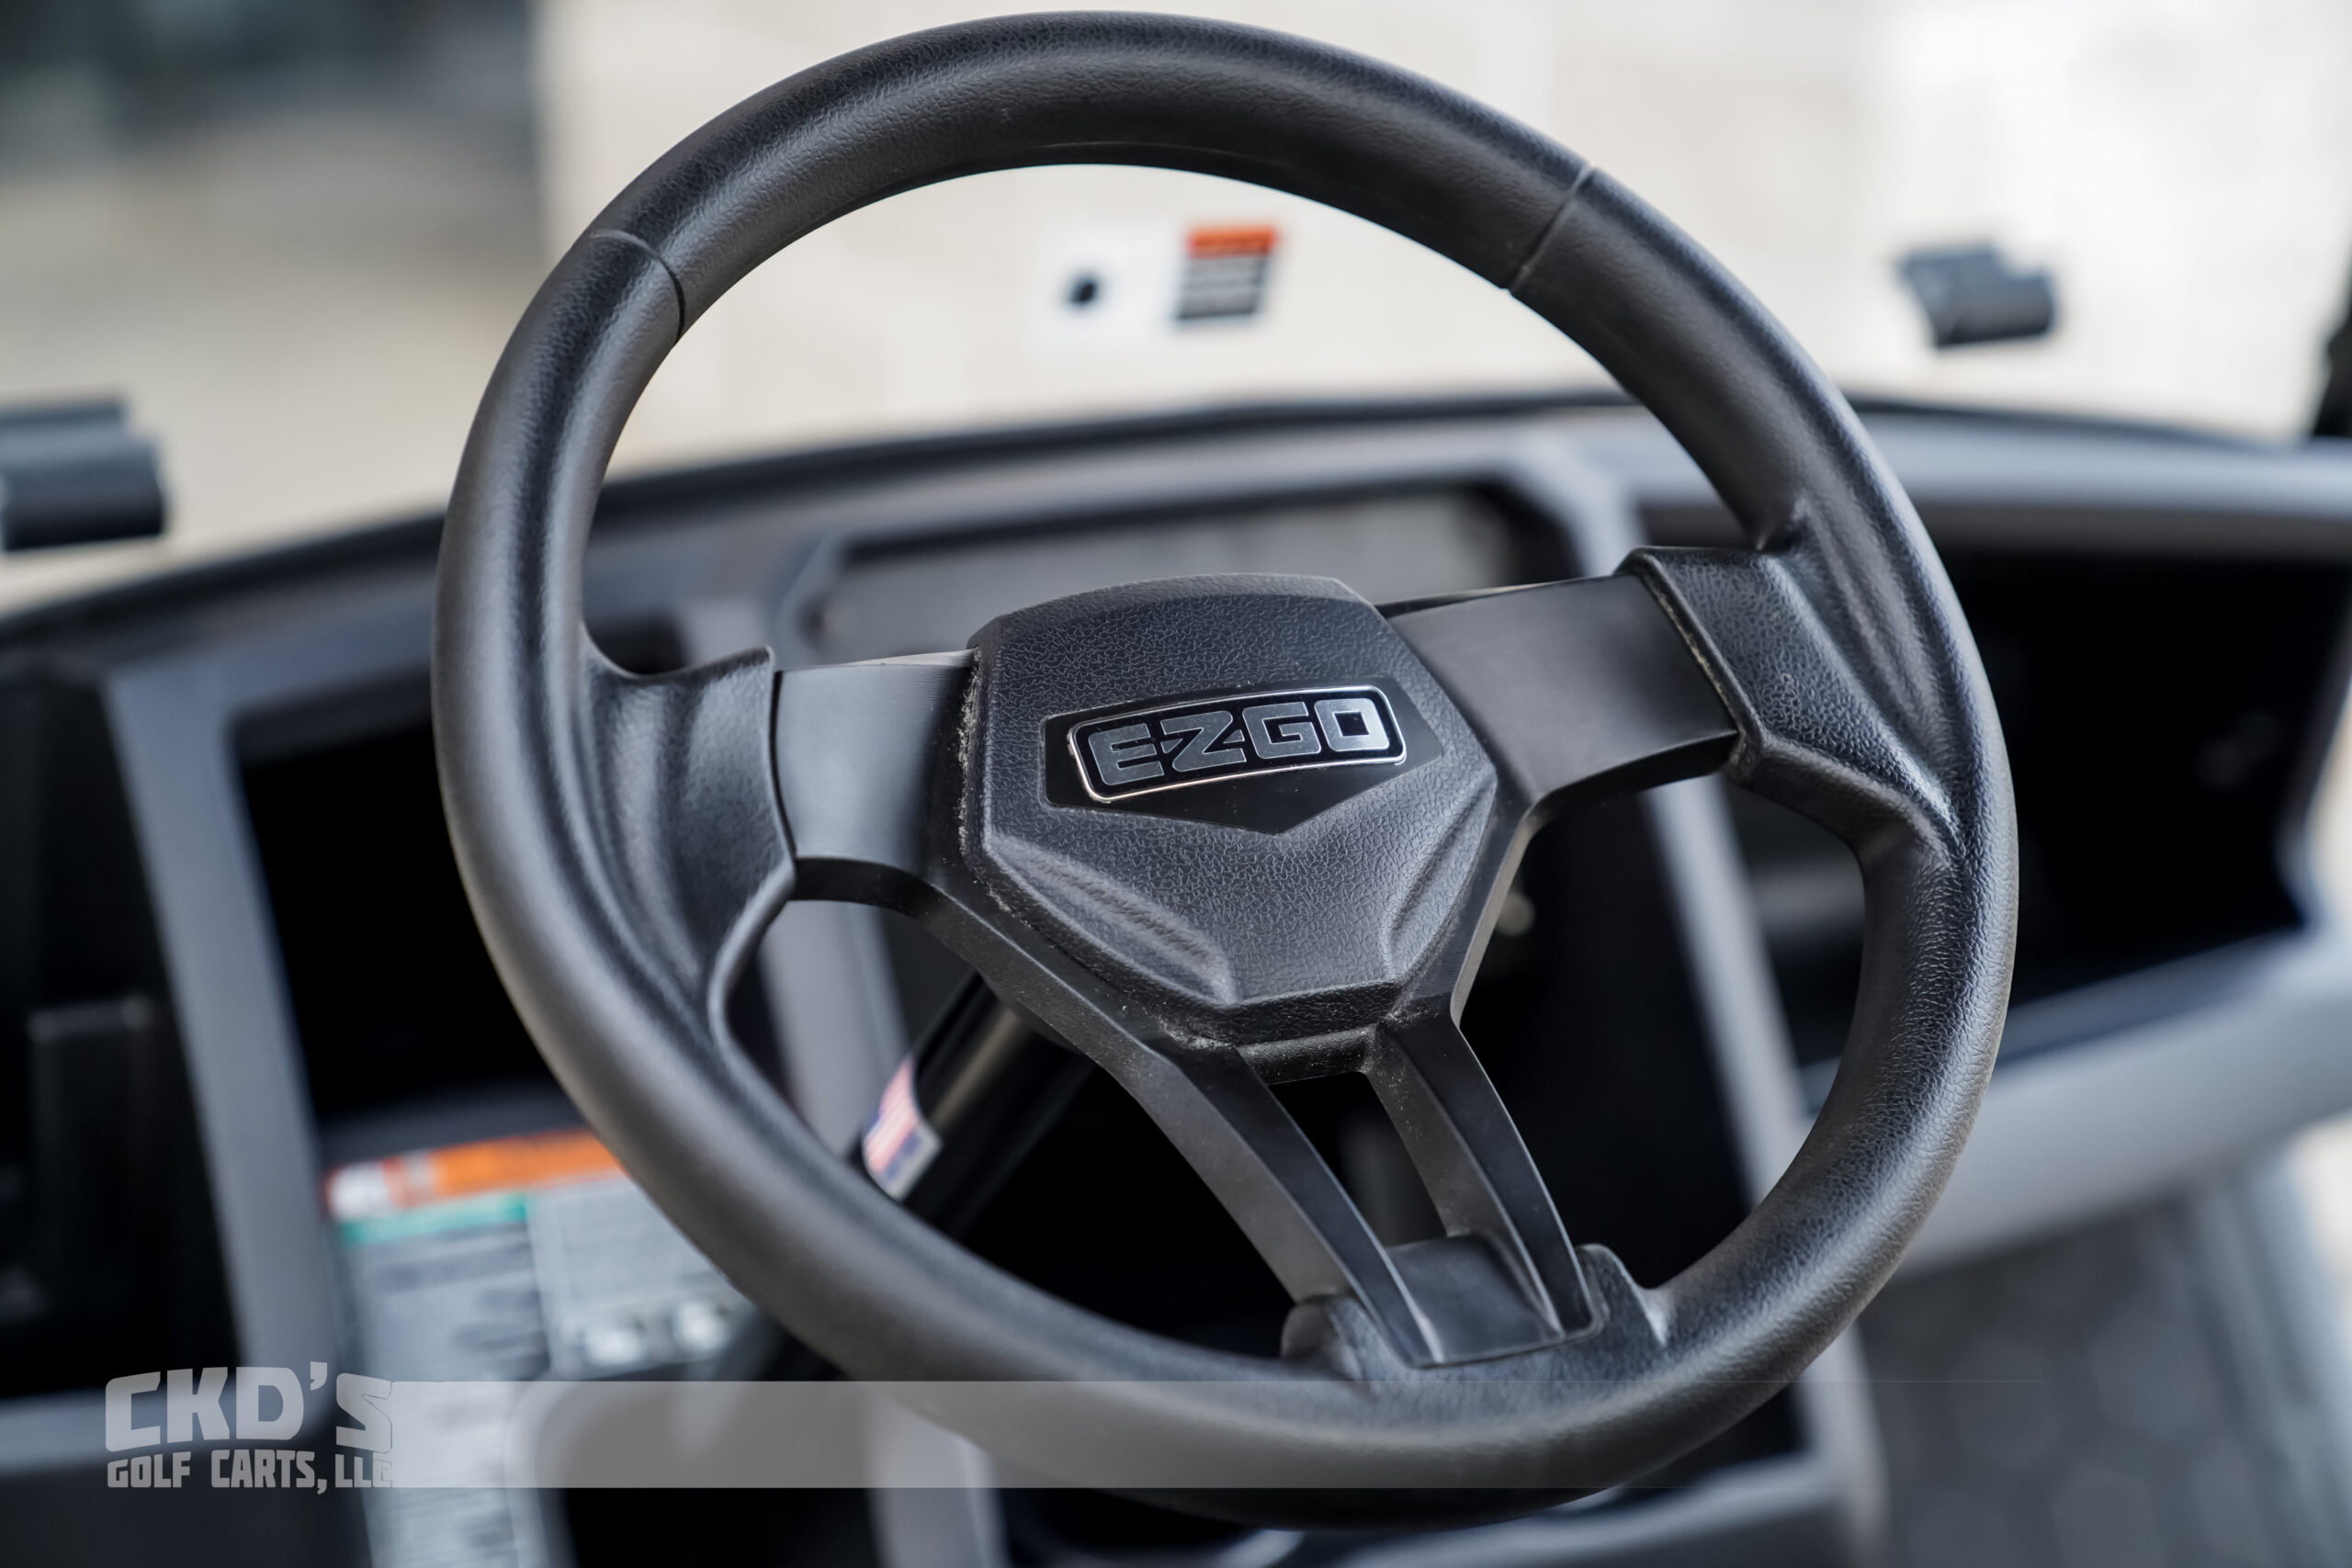 2021 EZGO S4 Gas EFI - CKD's Golf Carts